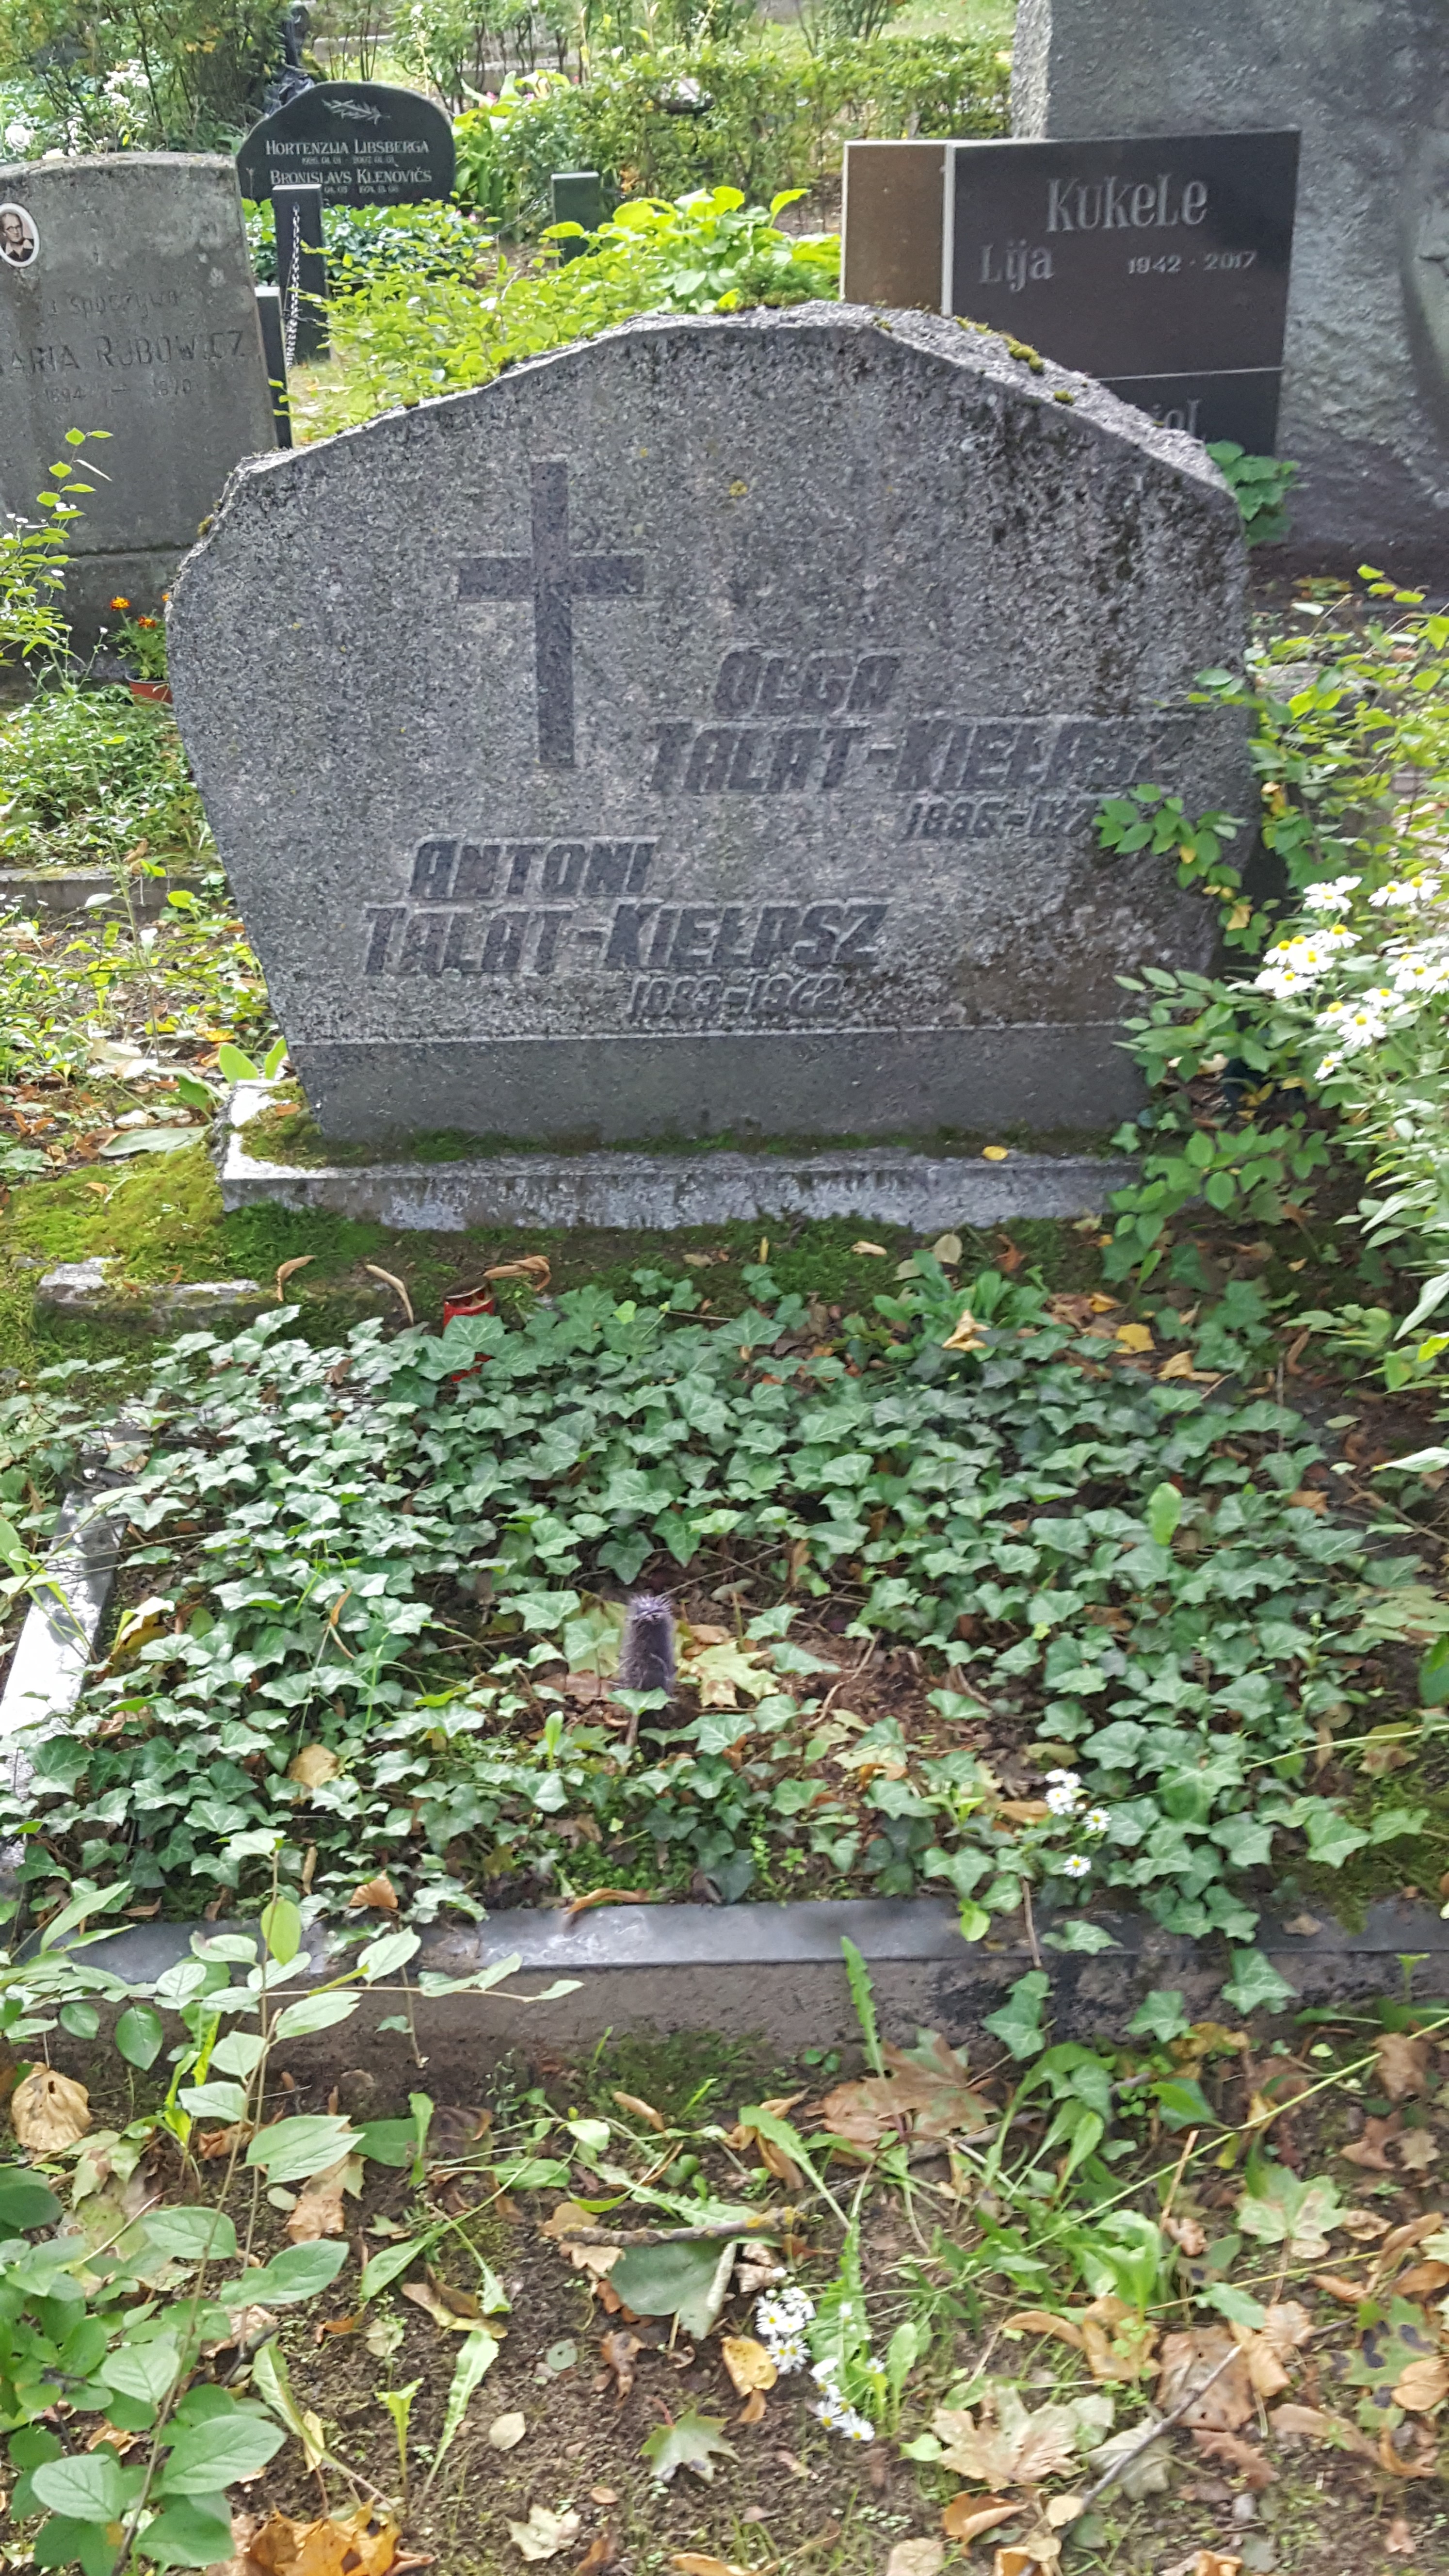 Tombstone of Antoni and Olga Talat-Kiełpsz, St Michael's cemetery in Riga, as of 2021.